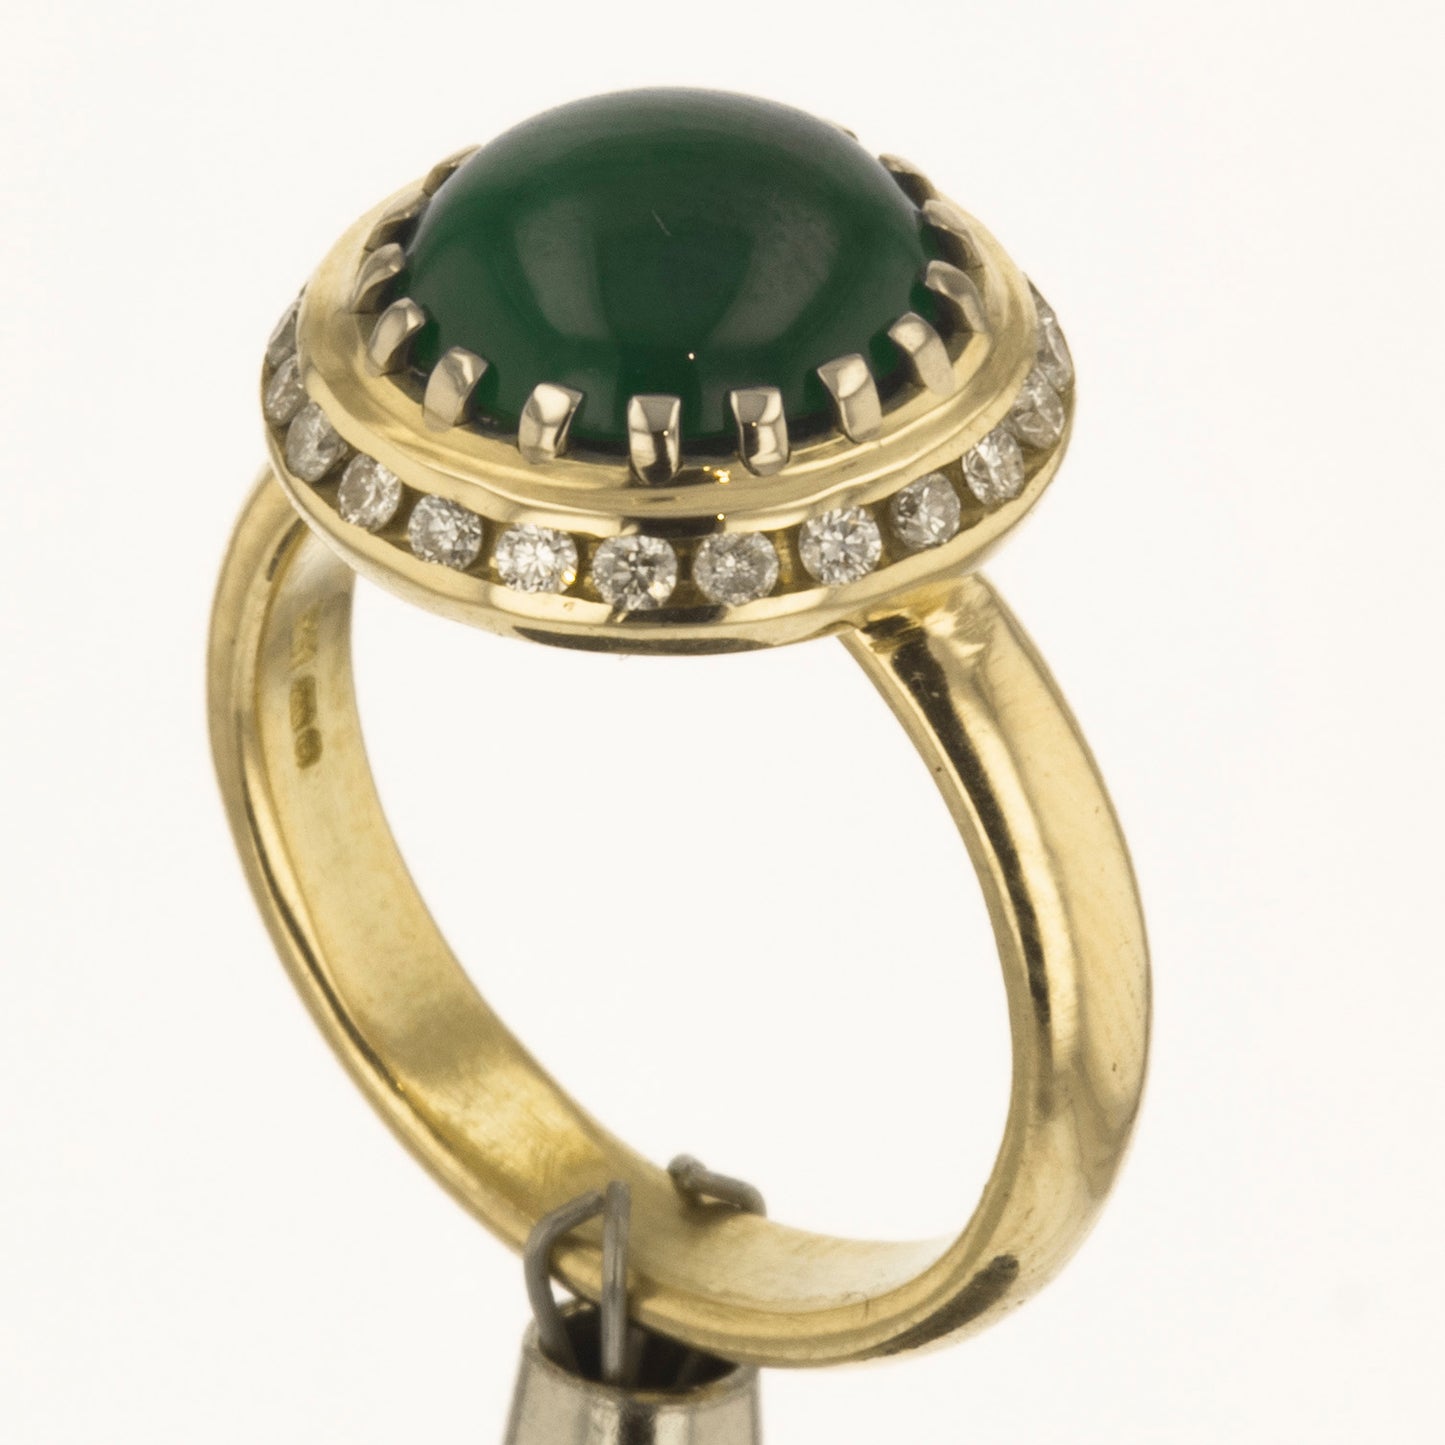 Green jade engagement ring